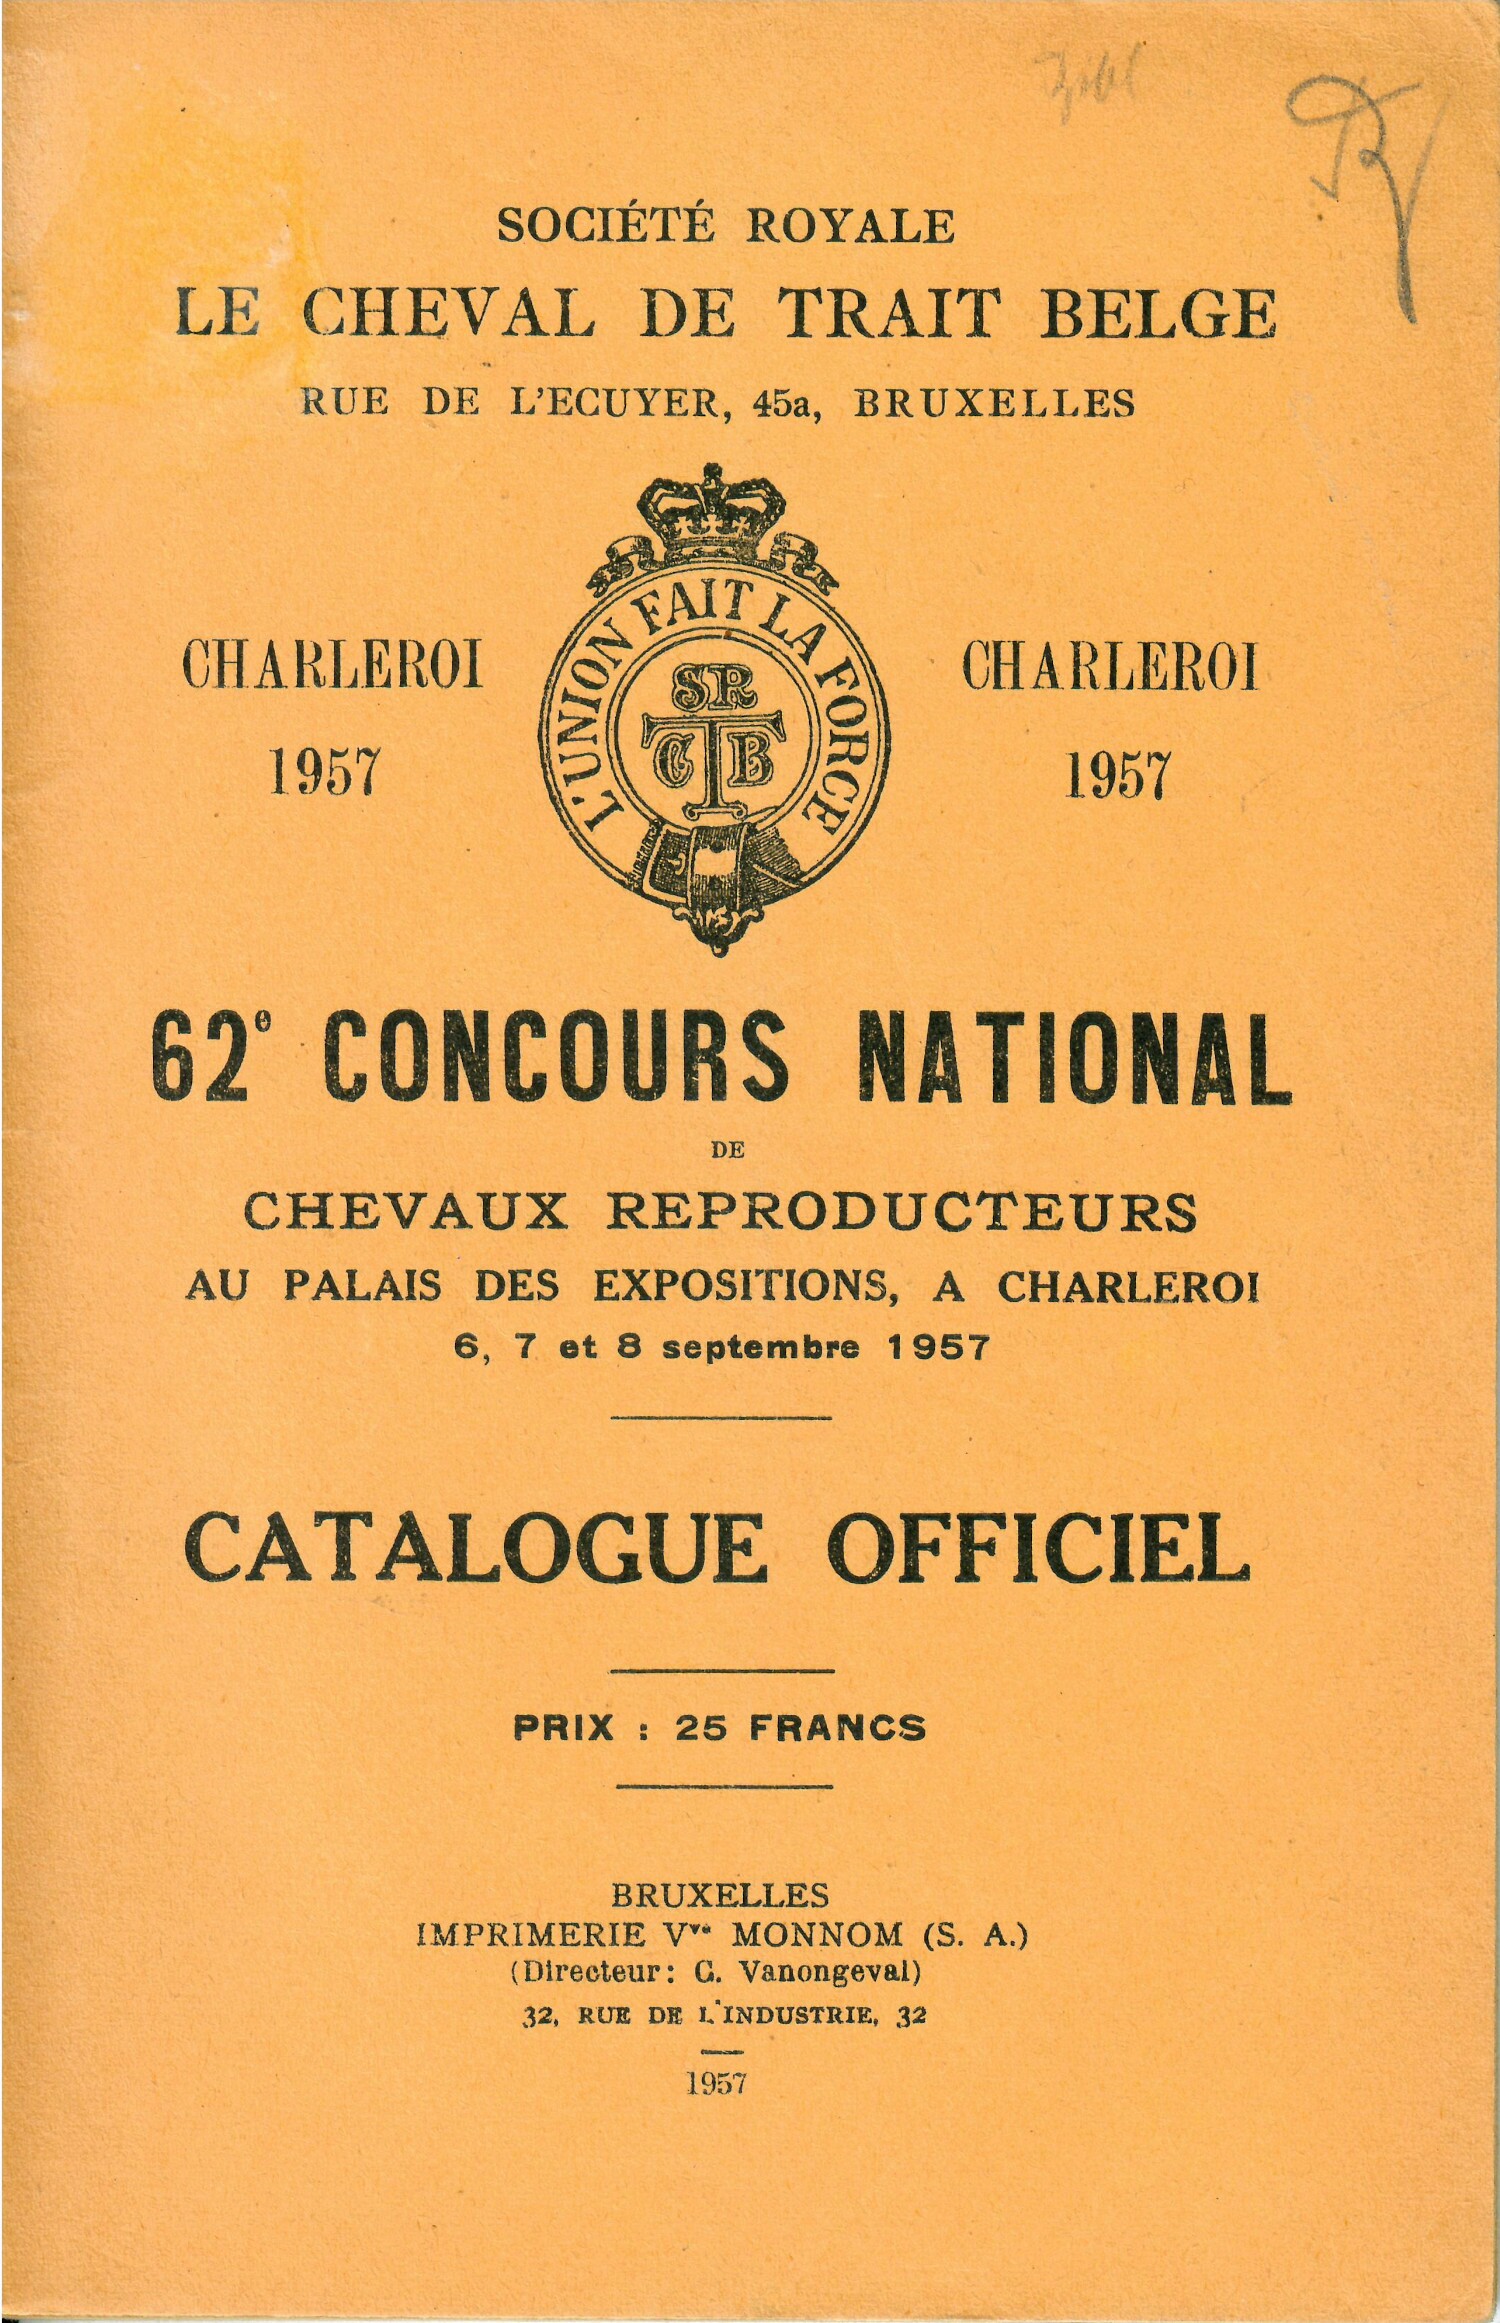 Les Cheval de trait belge et adennes 1957 (Herausgeber RR-R)